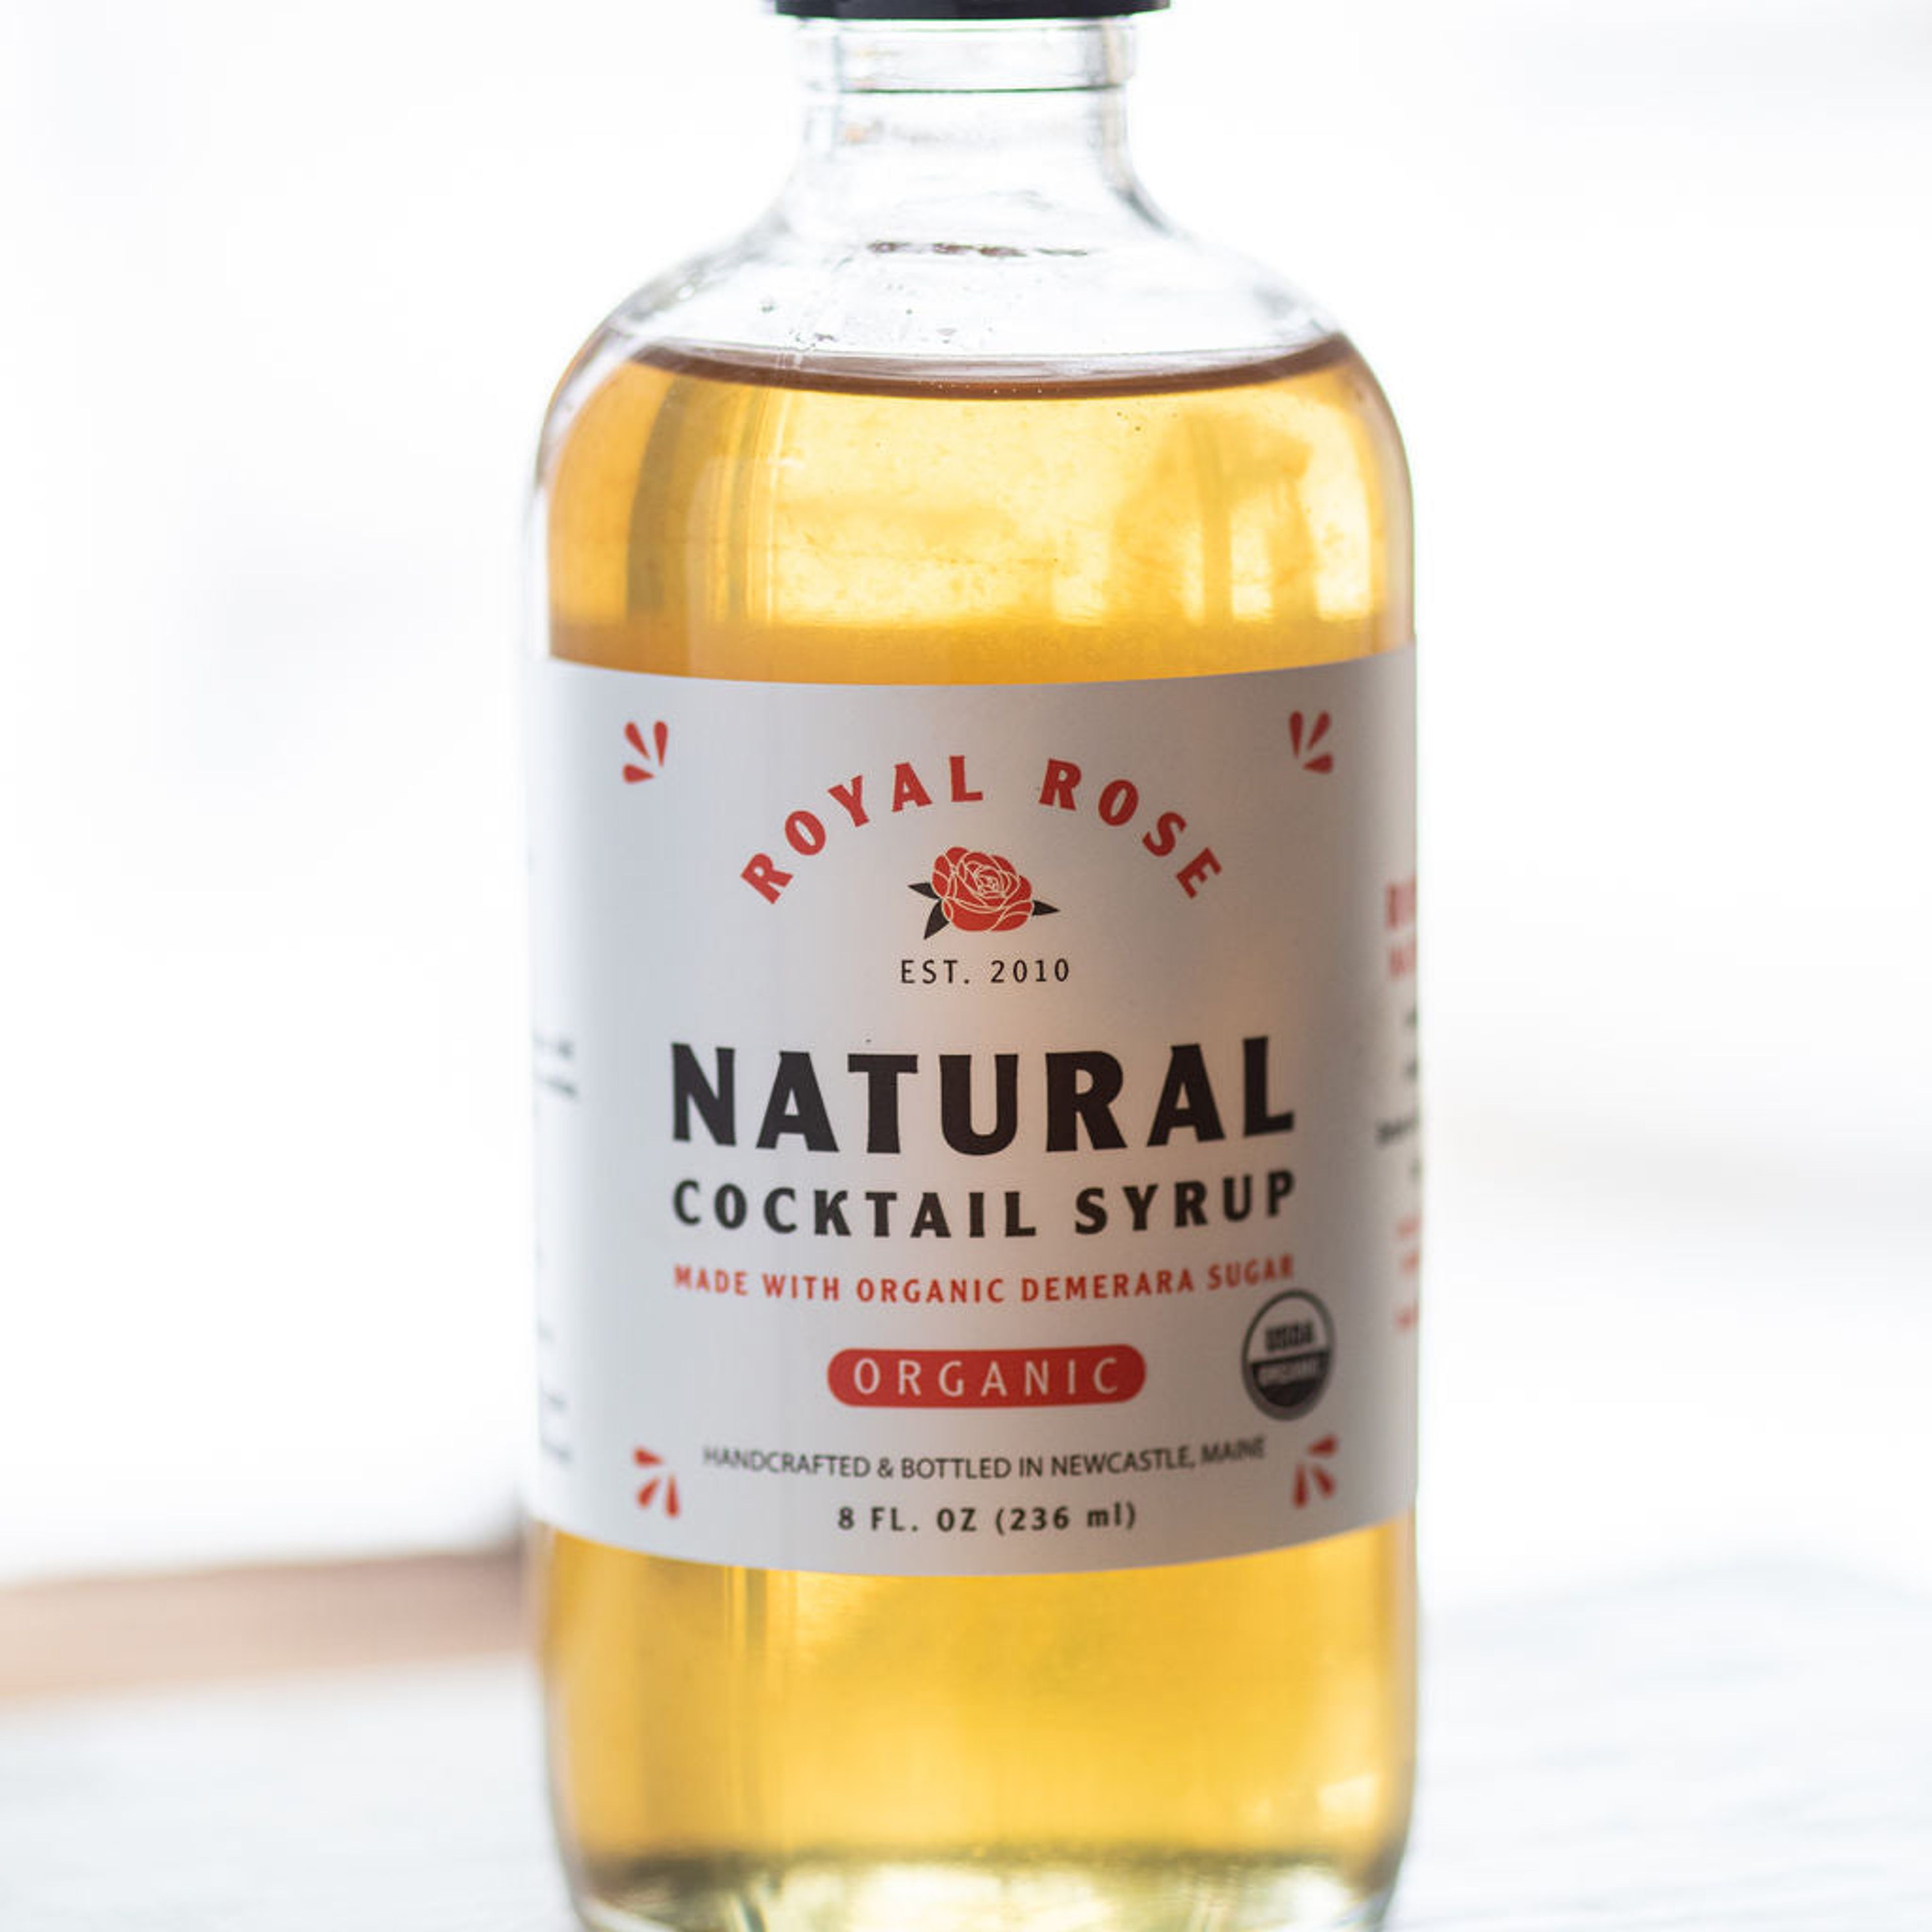 Natural Organic Simple Syrup